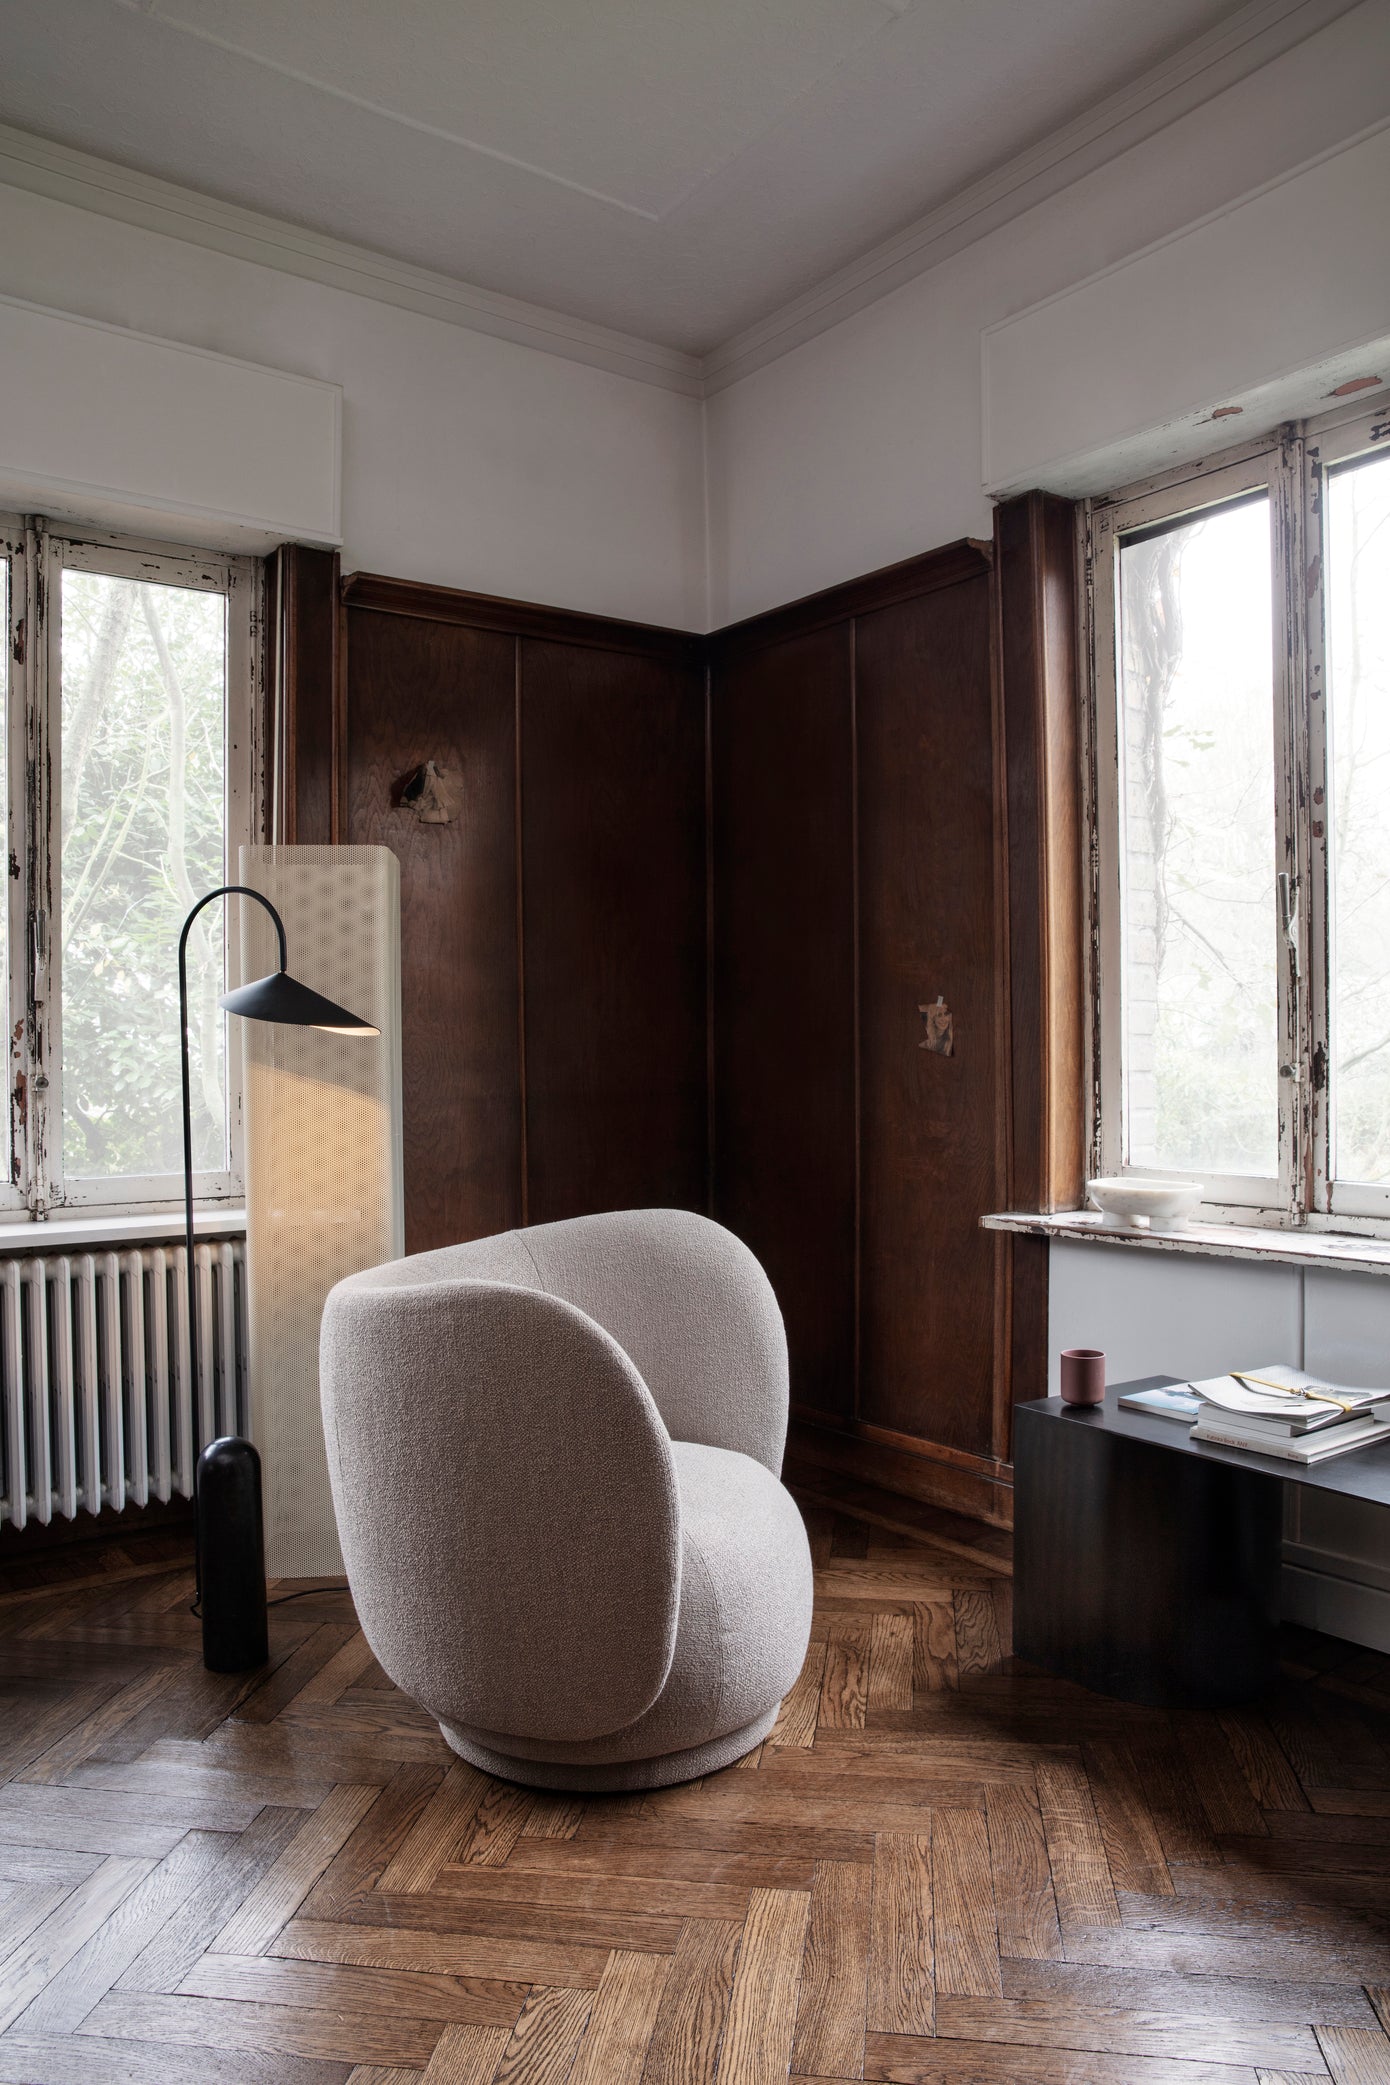 Rico Lounge Chair | Armchair | Bouclé fabric - Lifestory - ferm Living